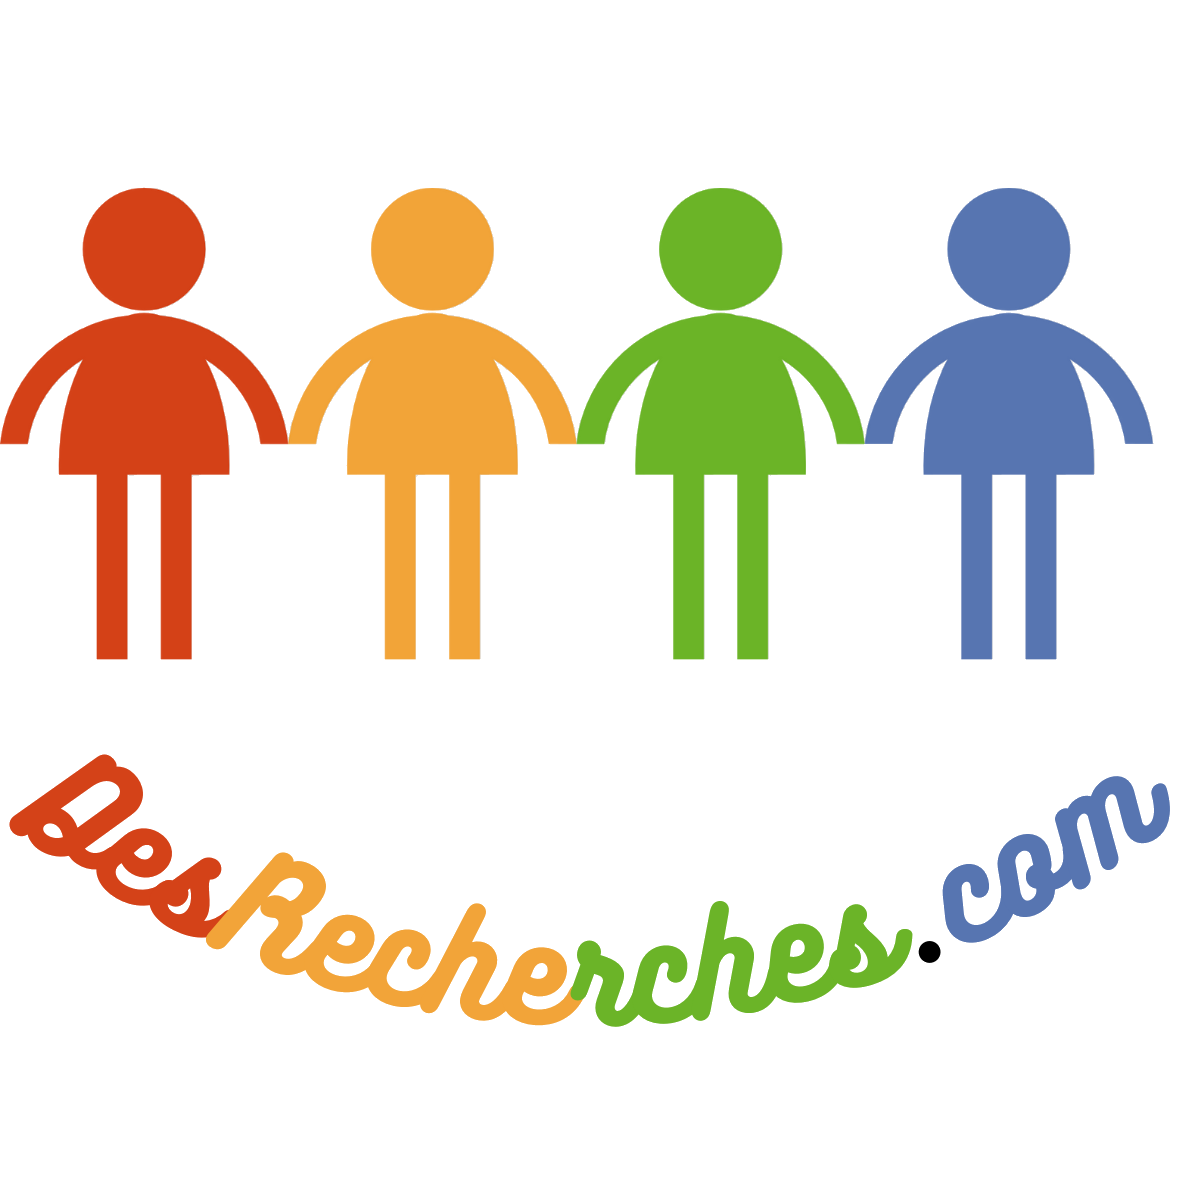 Logo DesRecherches.com - 2 (transparence )